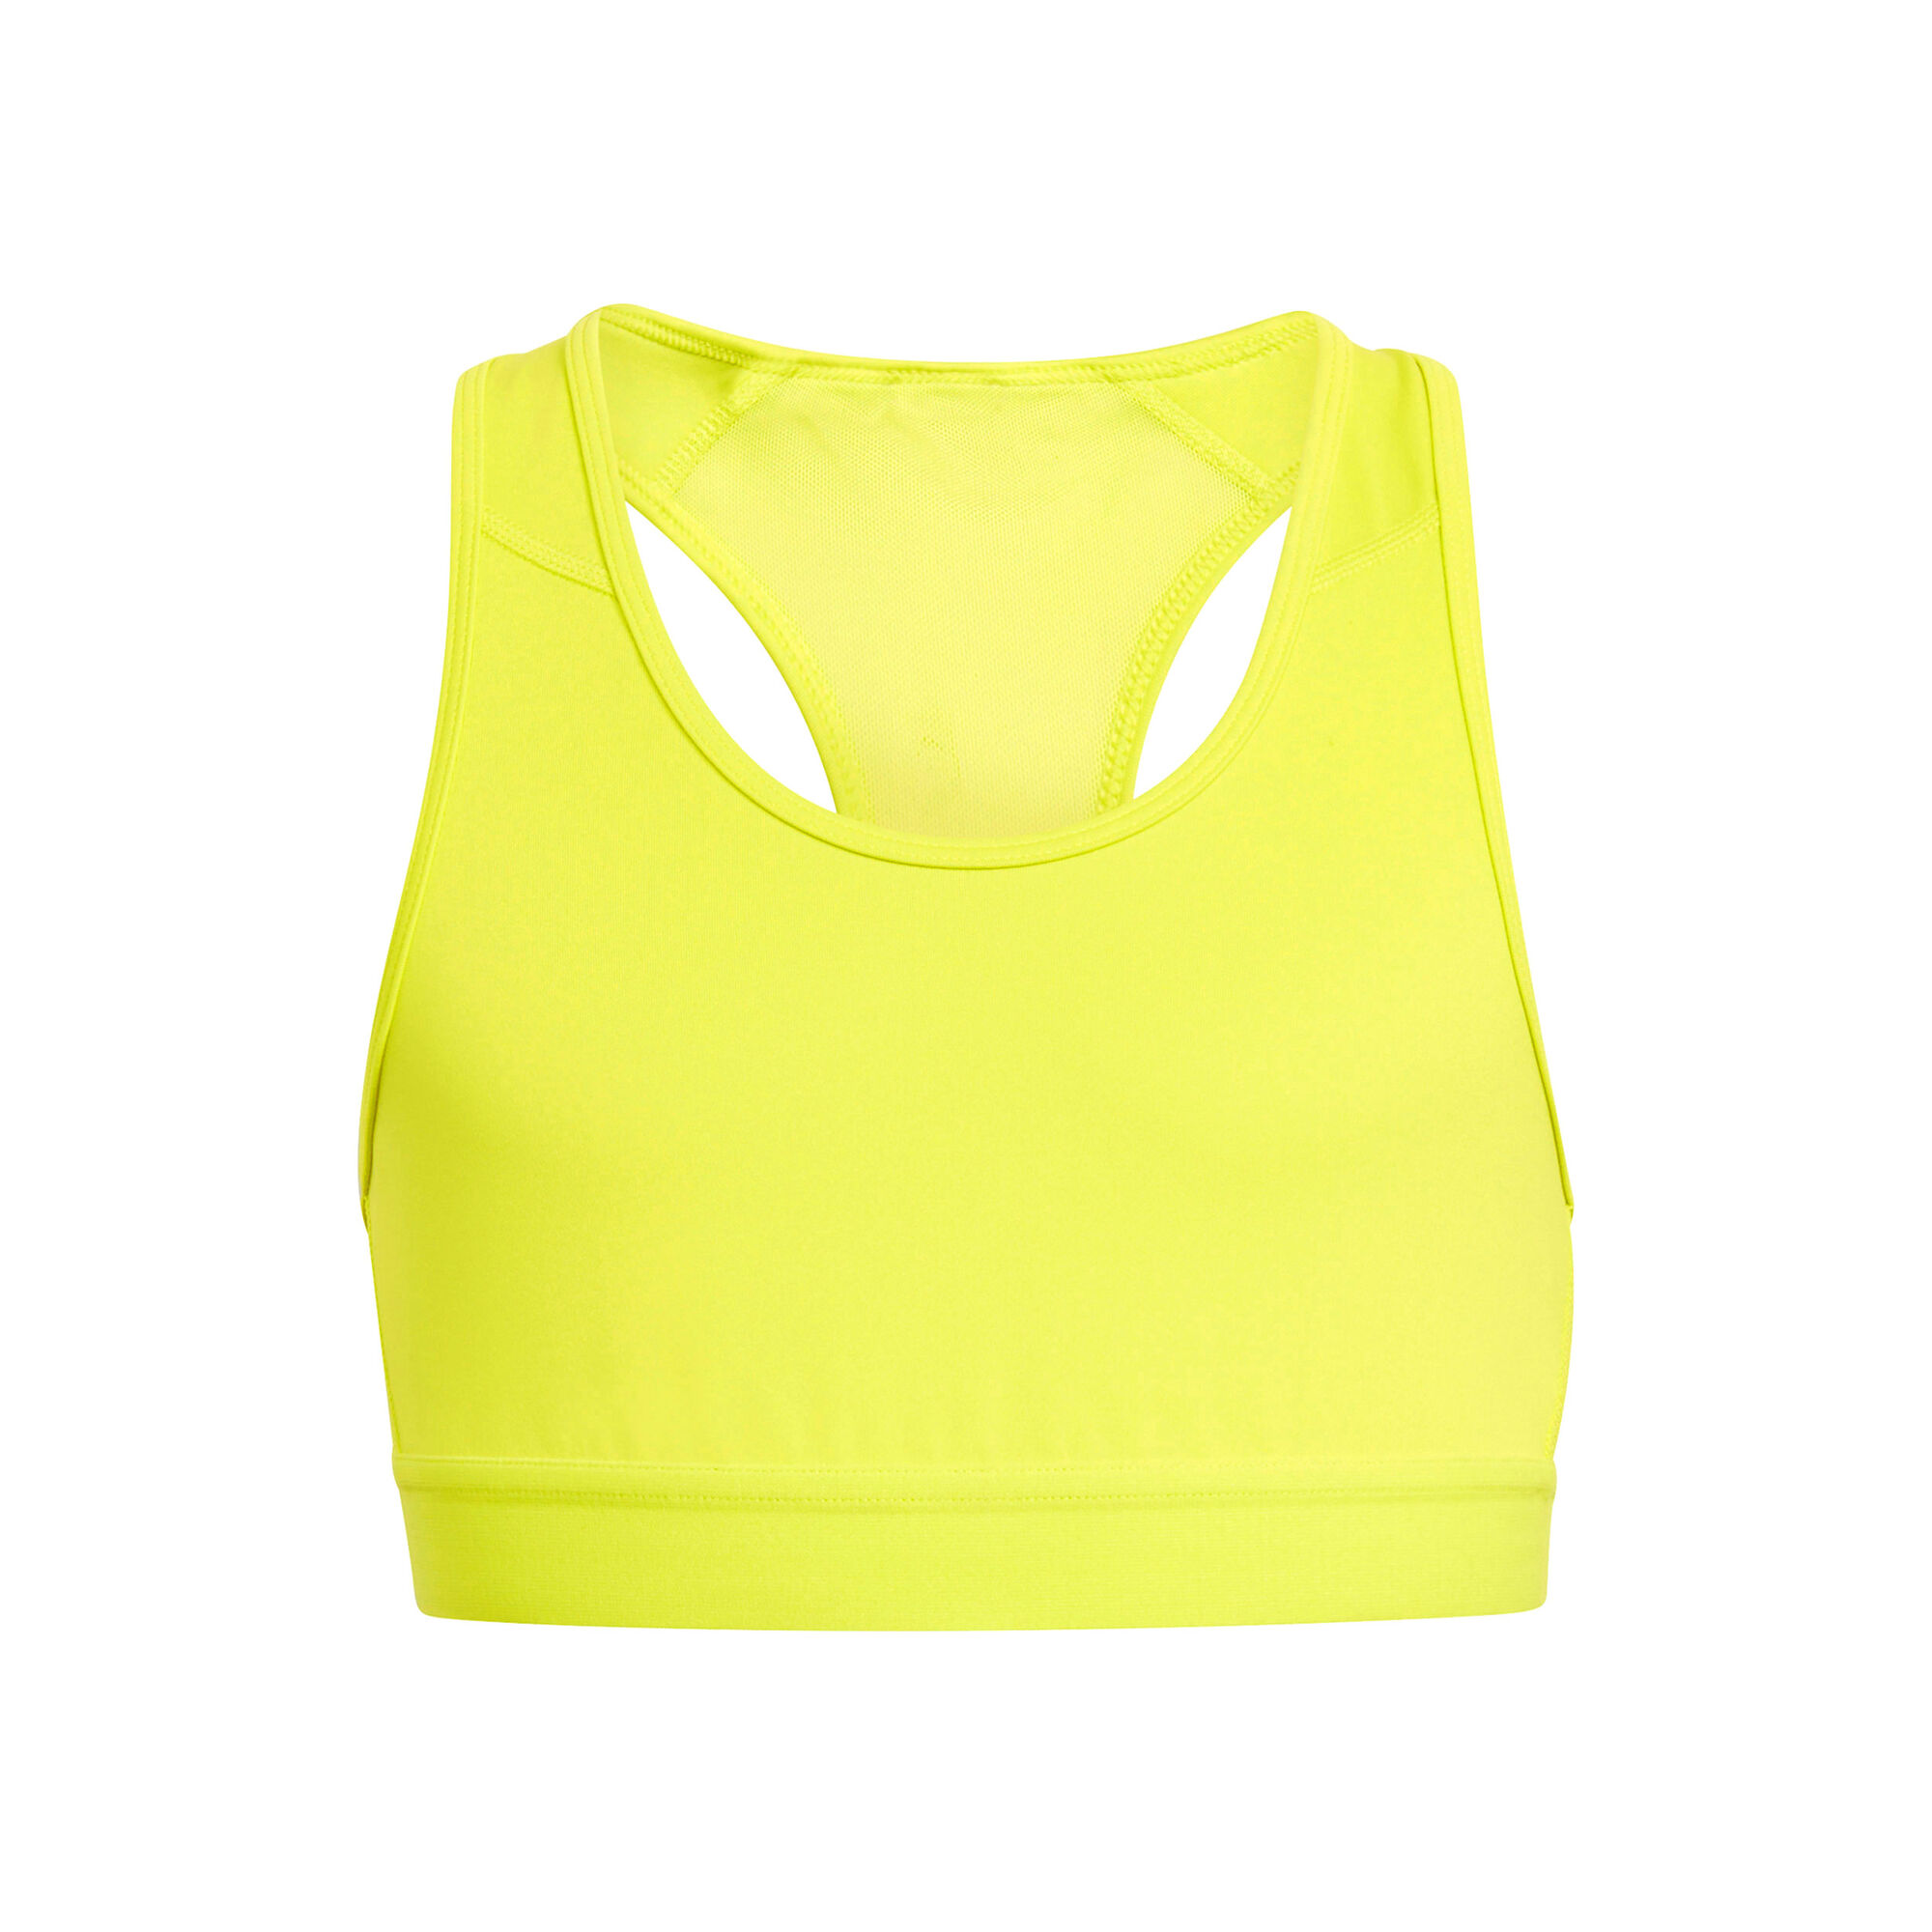 Buy adidas Alphaskin Sports Bras Girls Neon Yellow online